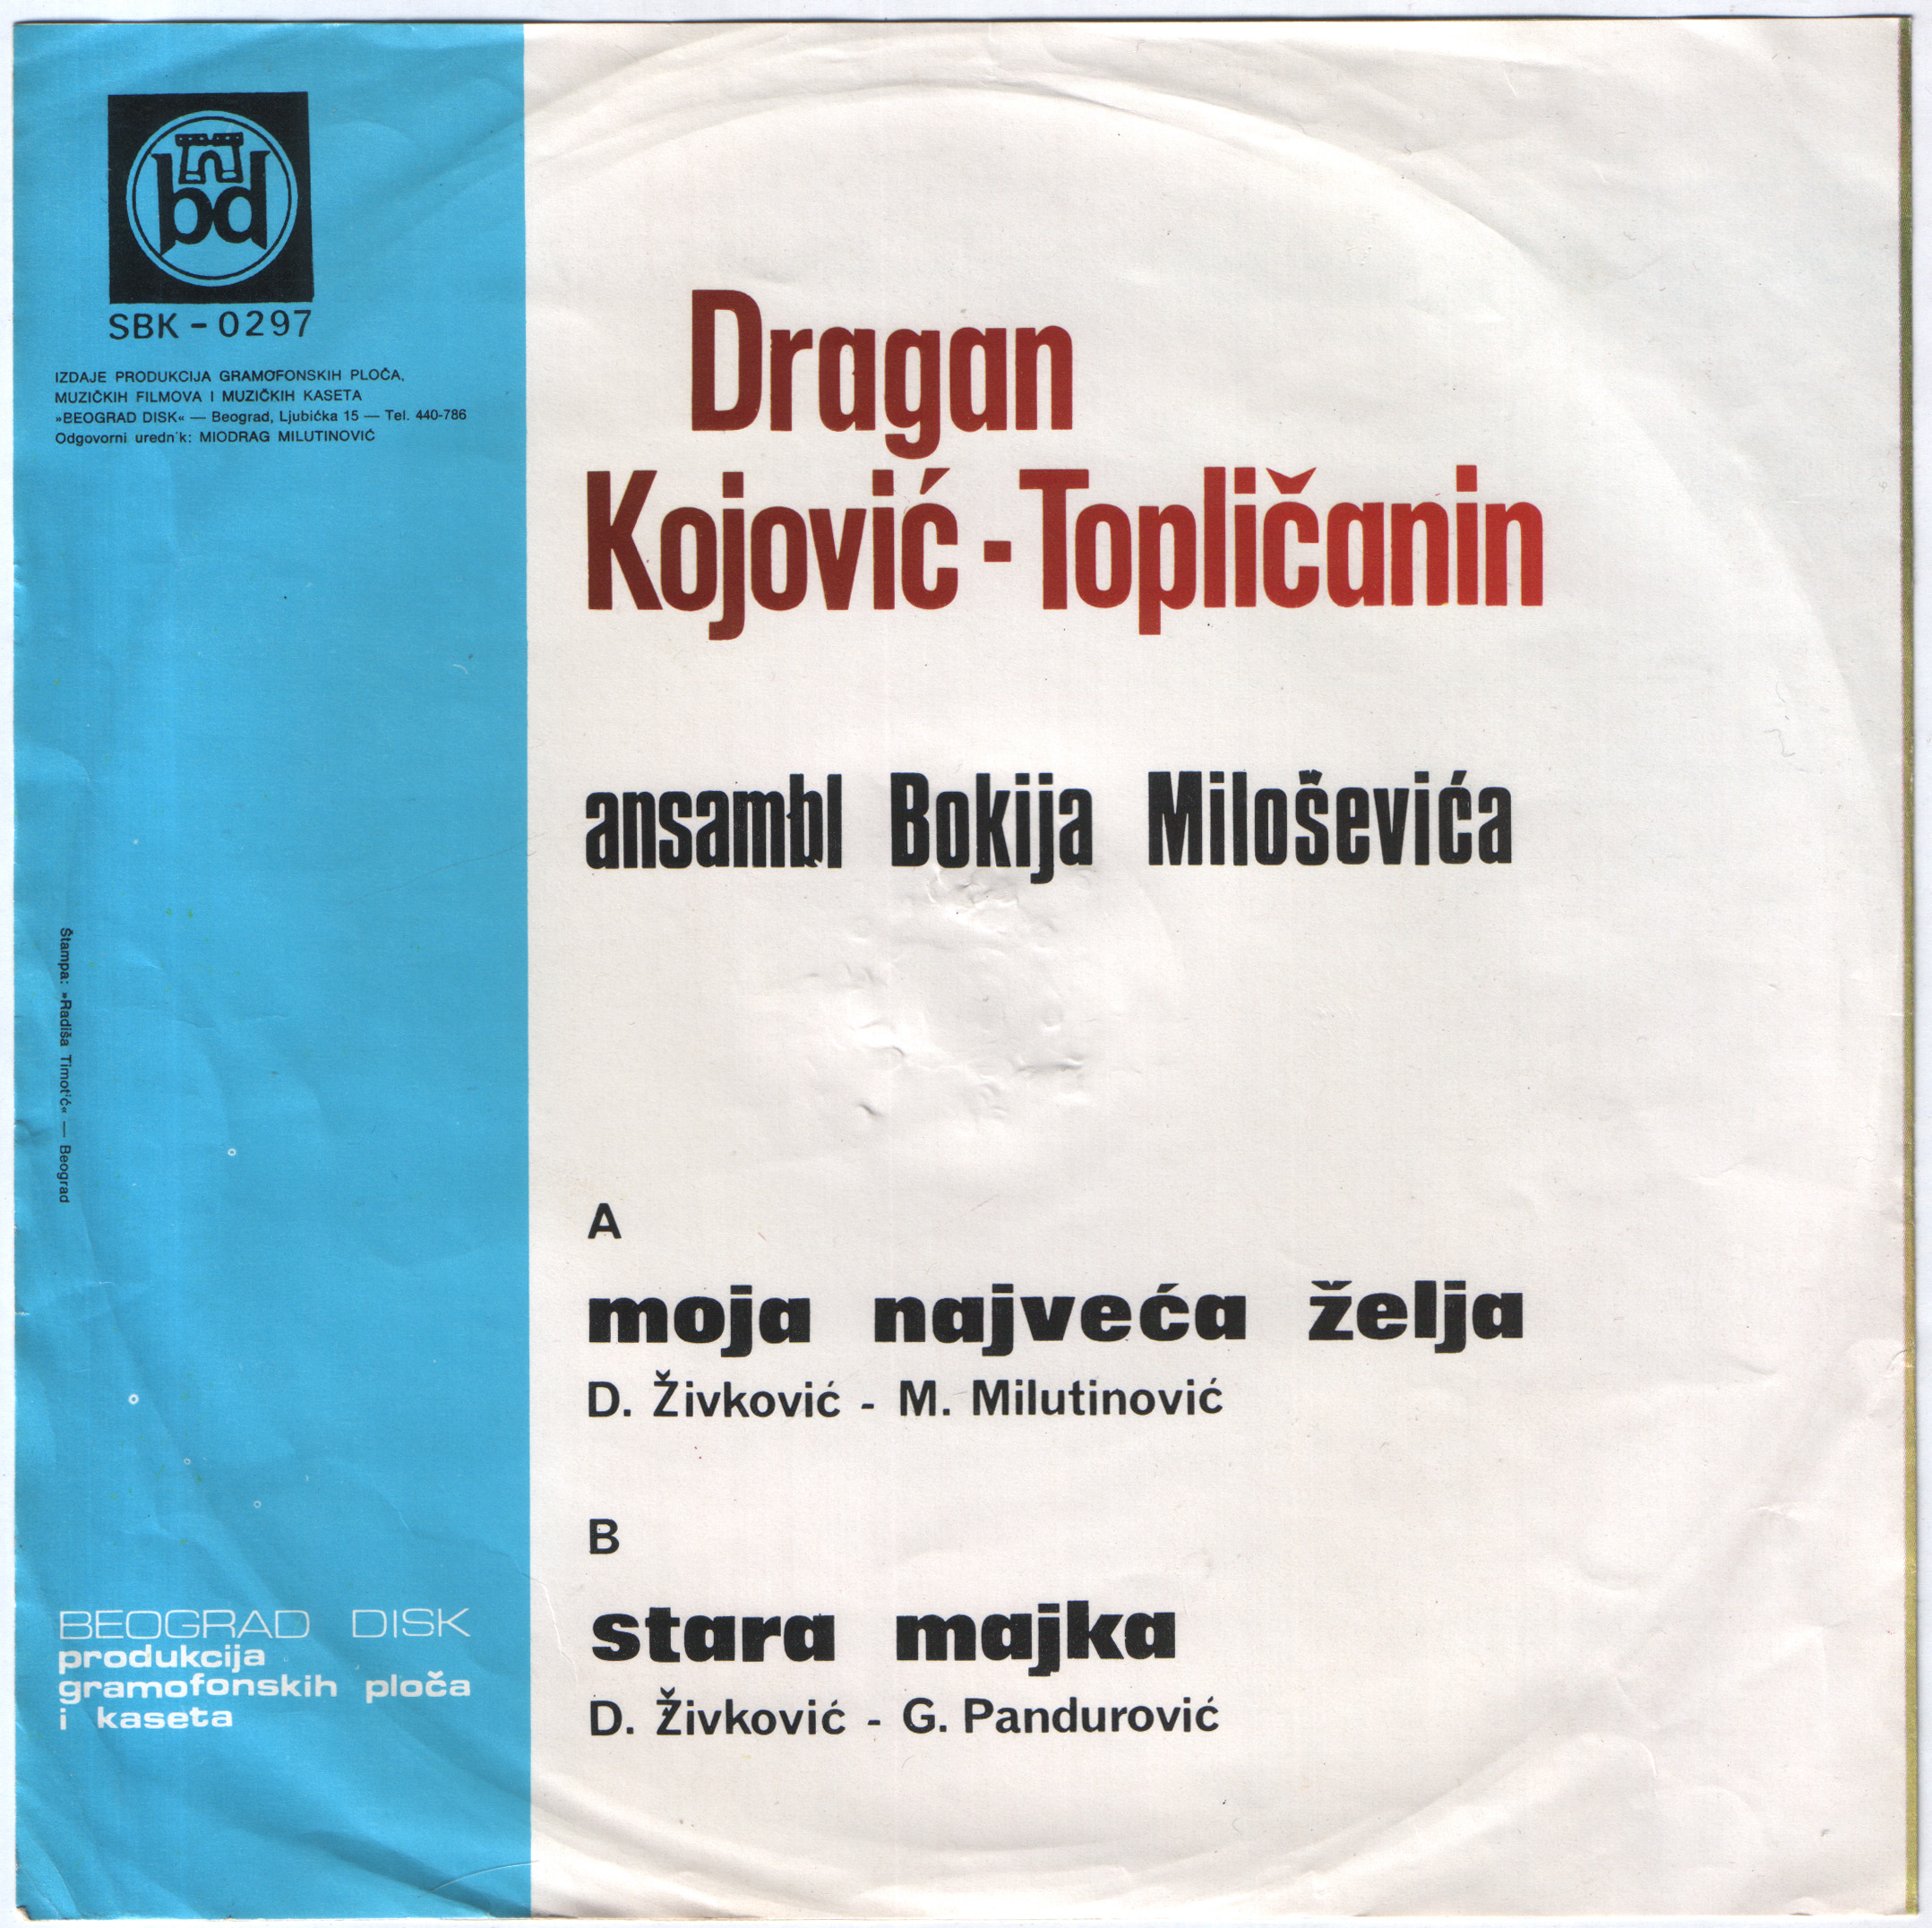 Dragan Kojovic Toplicanin Z